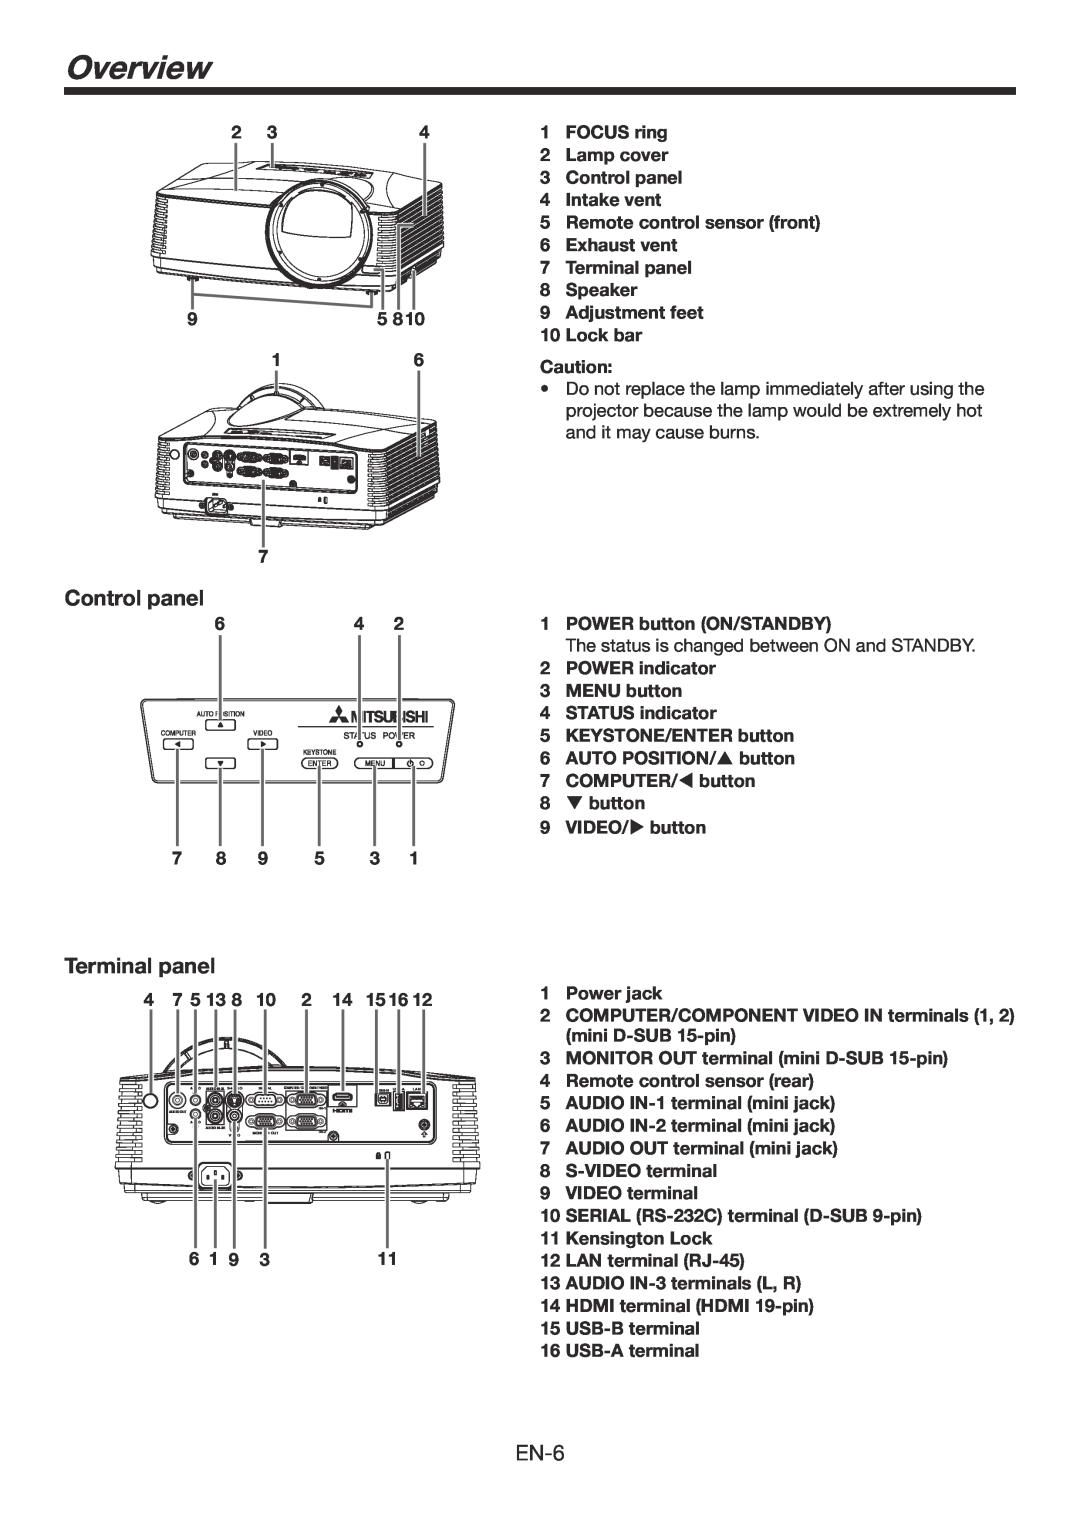 Mitsubishi Electronics WD390U-EST Overview, Control panel, Terminal panel, Speaker 9 Adjustment feet 10 Lock bar, 7 5 13 